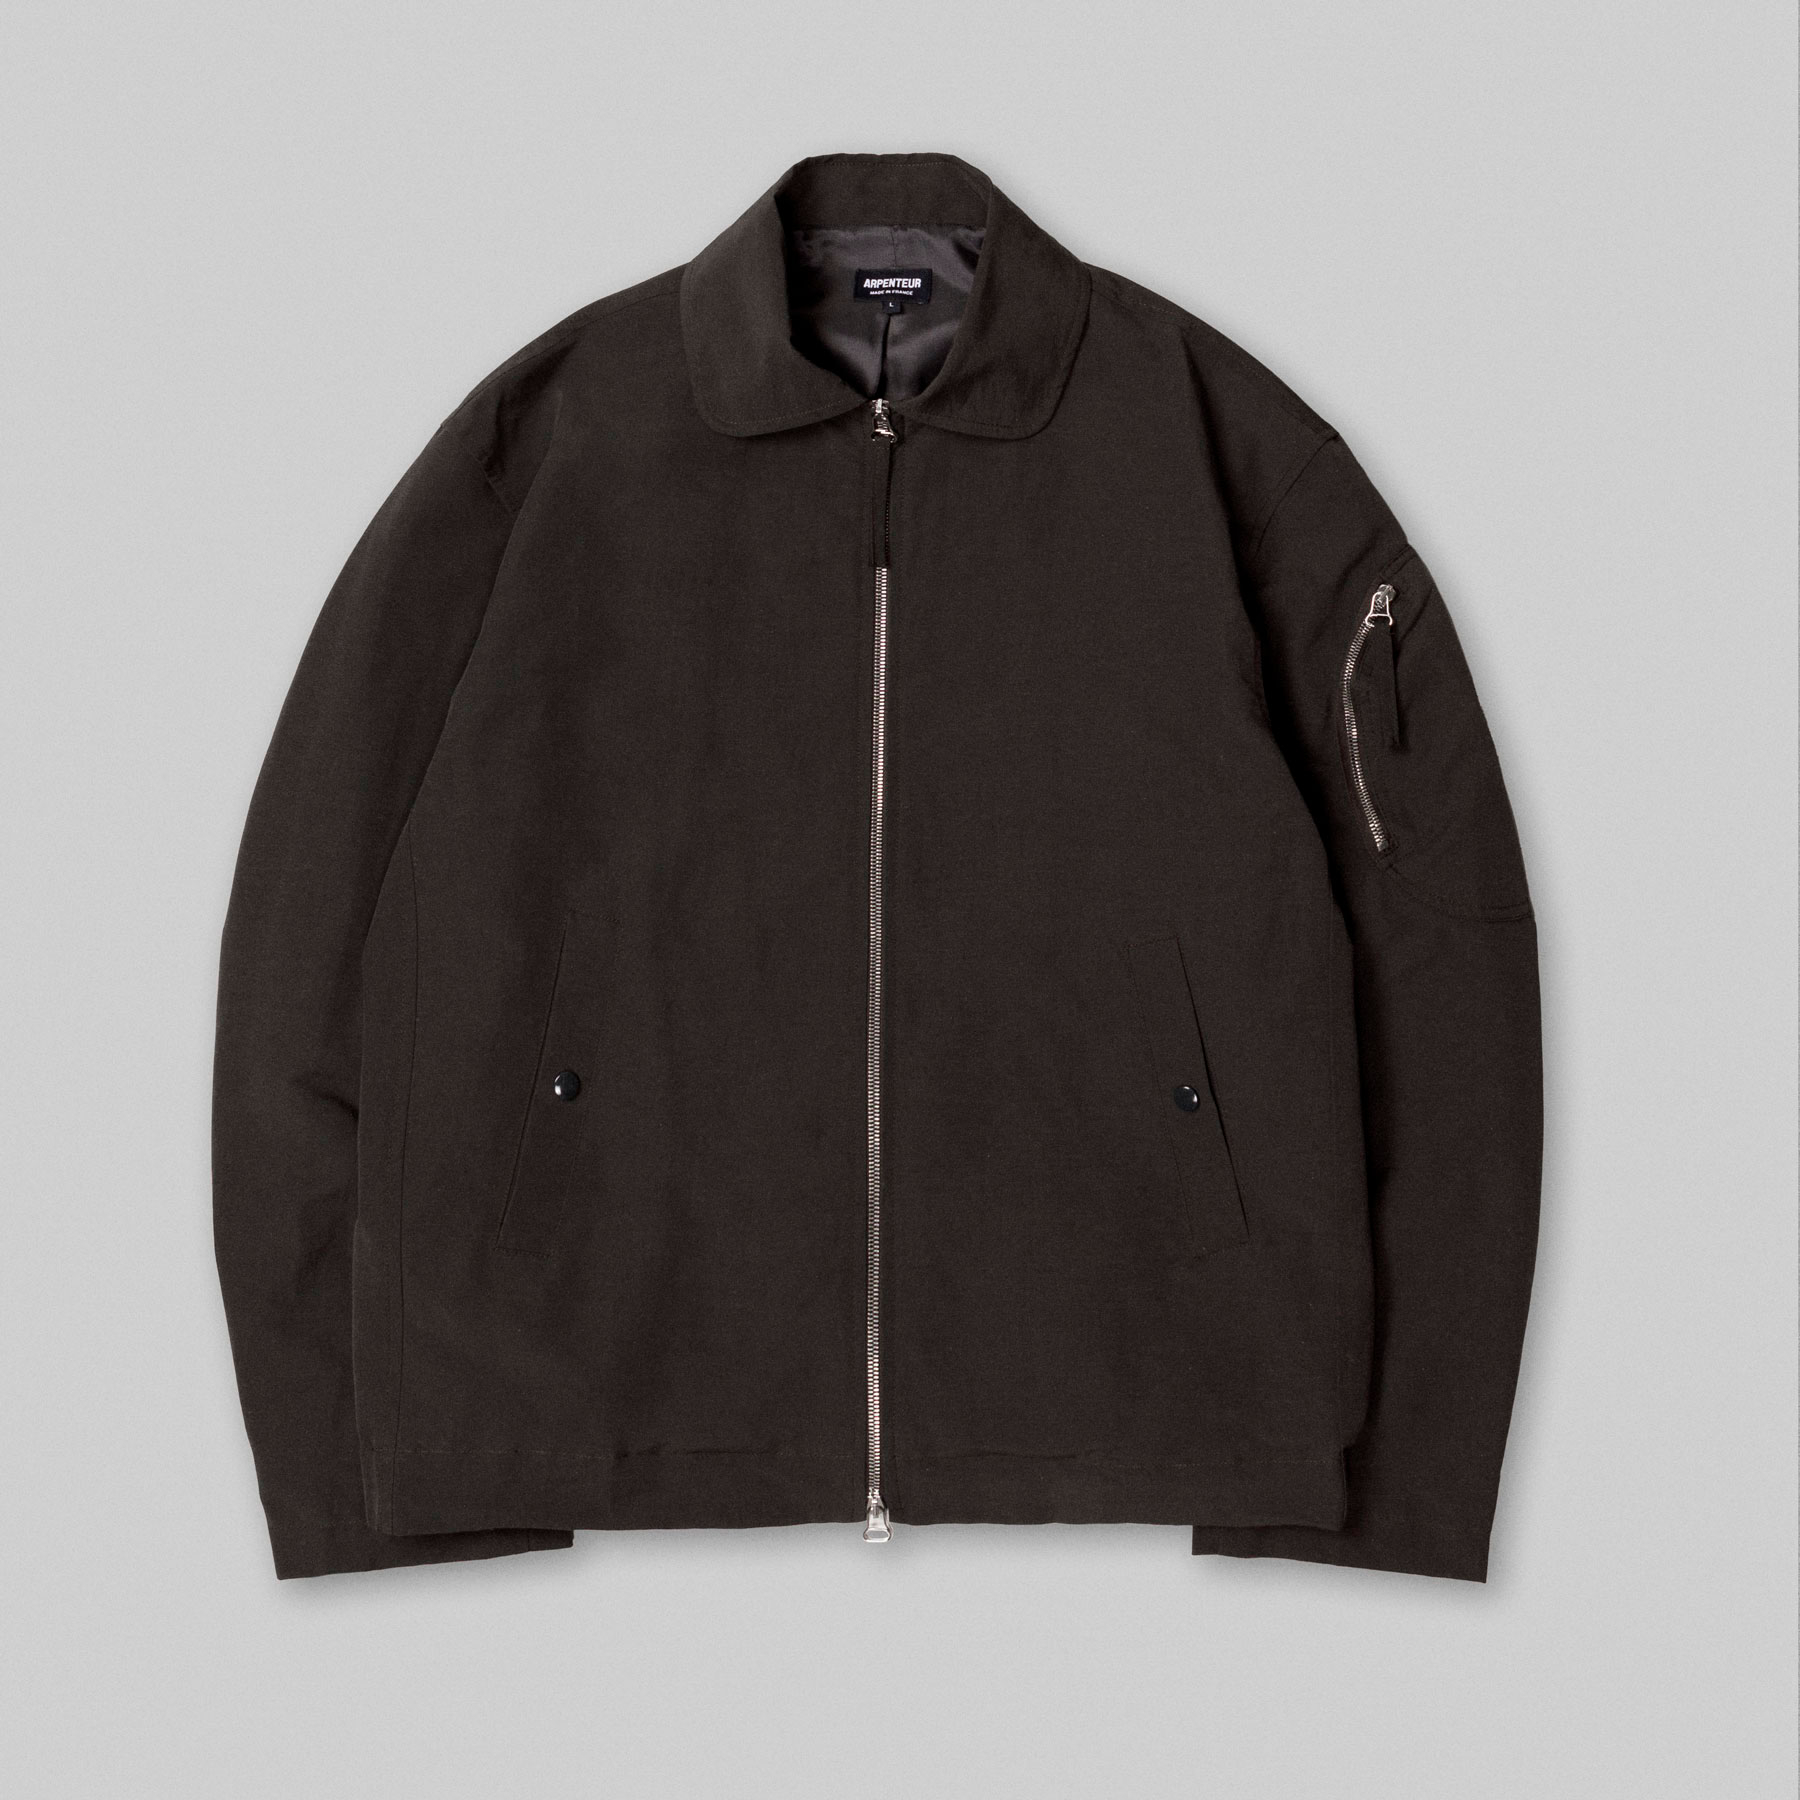 VOL short jacket by Arpenteur in Charcoal color